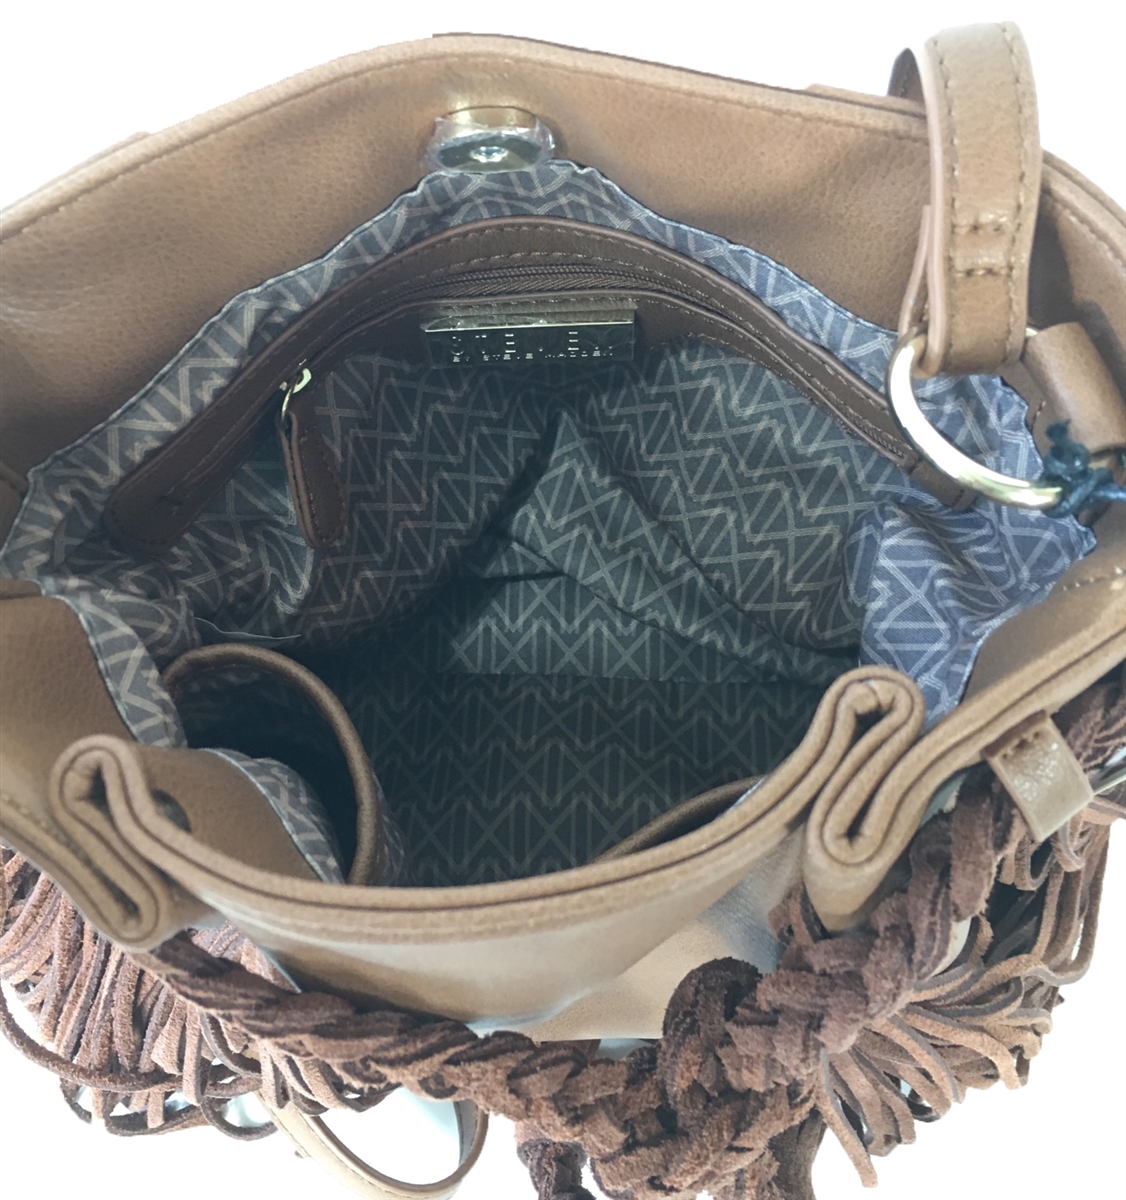 Handbags with Fringe